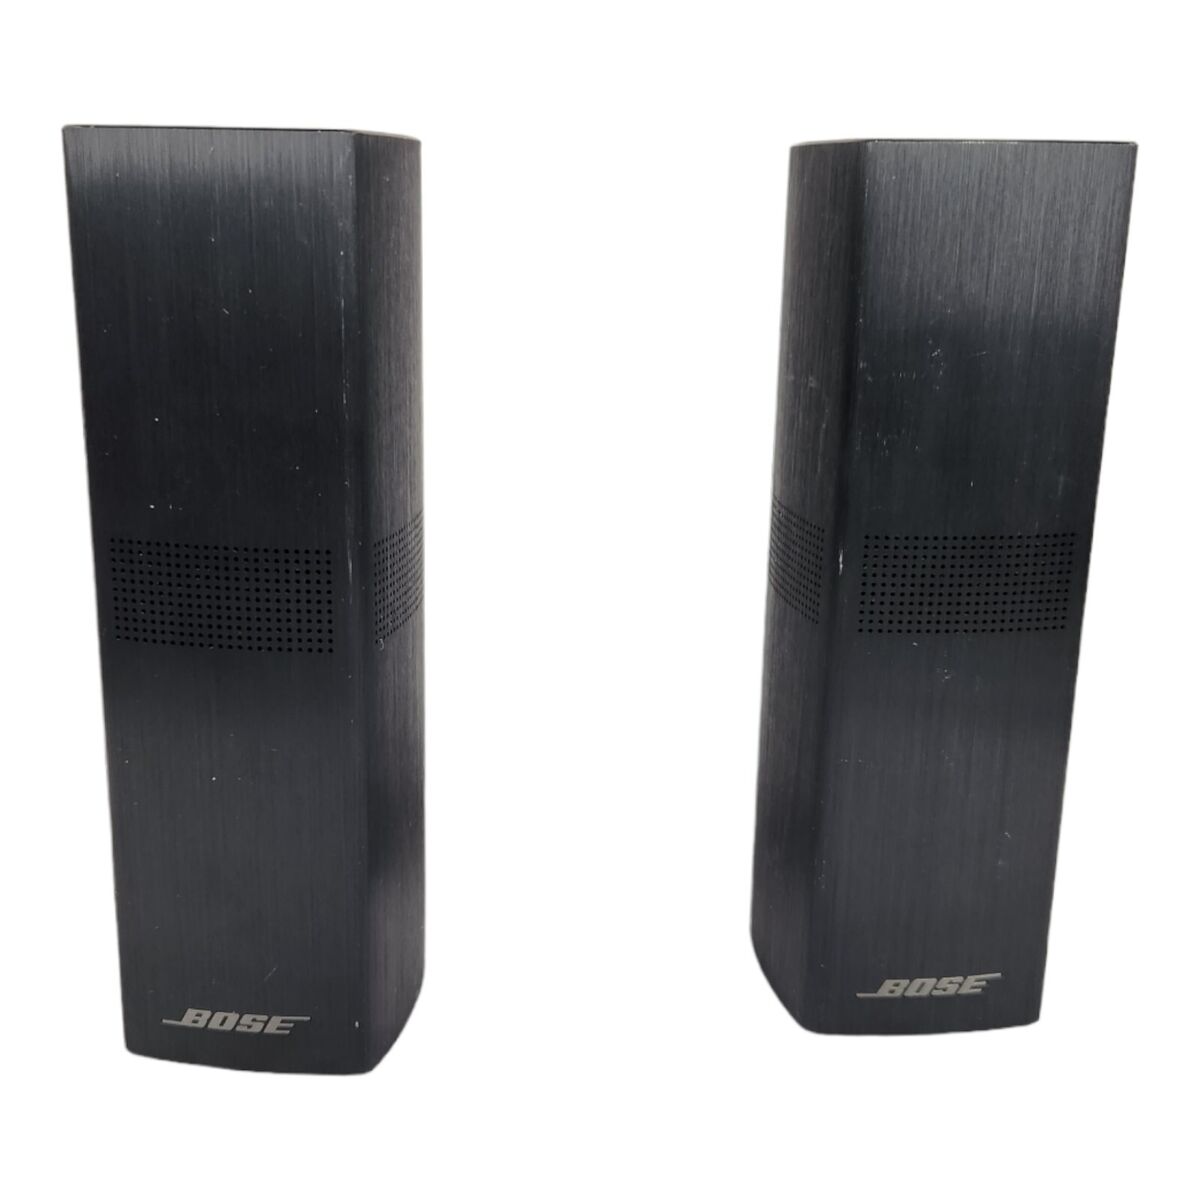 Bose Surround 700 Wireless Speakers - Black (PAIR - MISSING BOTTOM